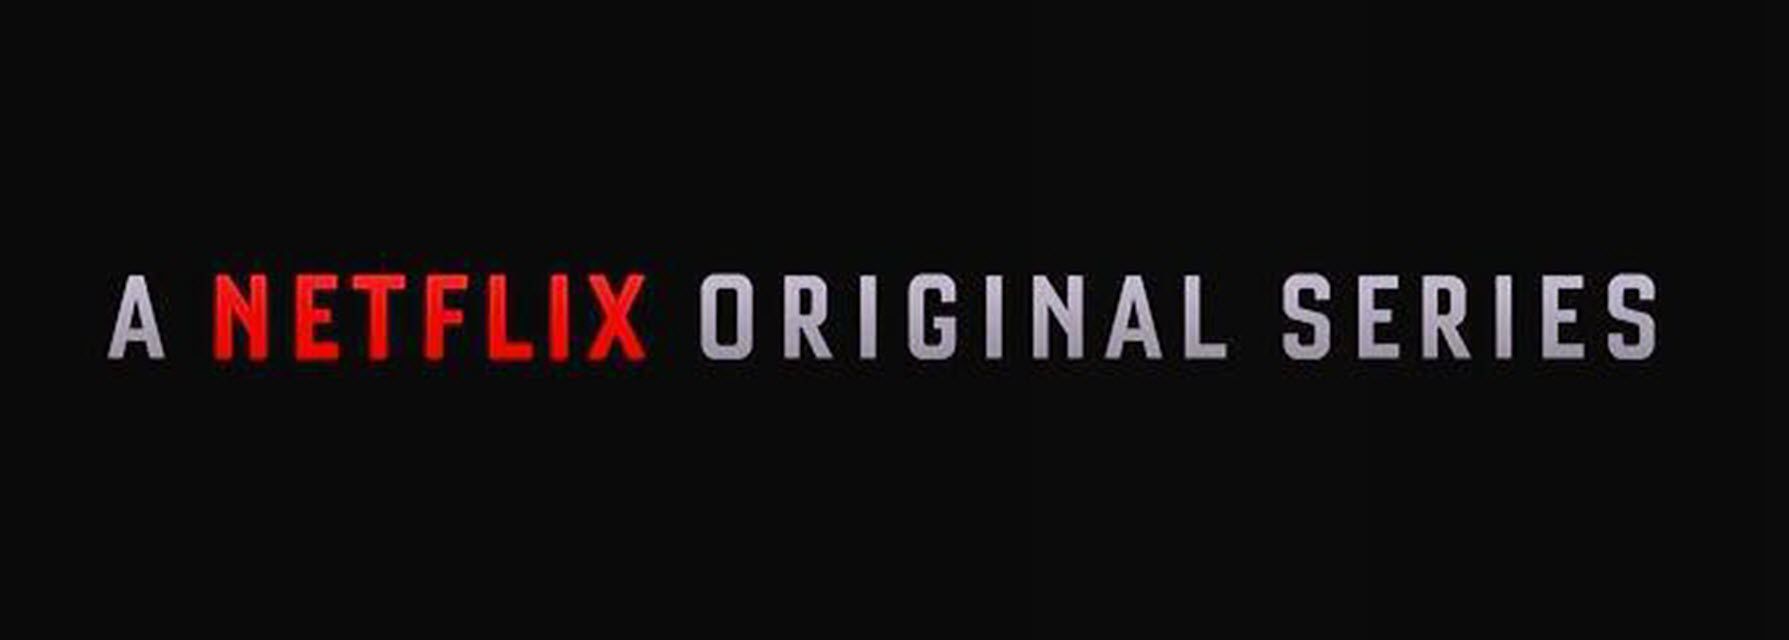 O logotipo da Netflix Original Series